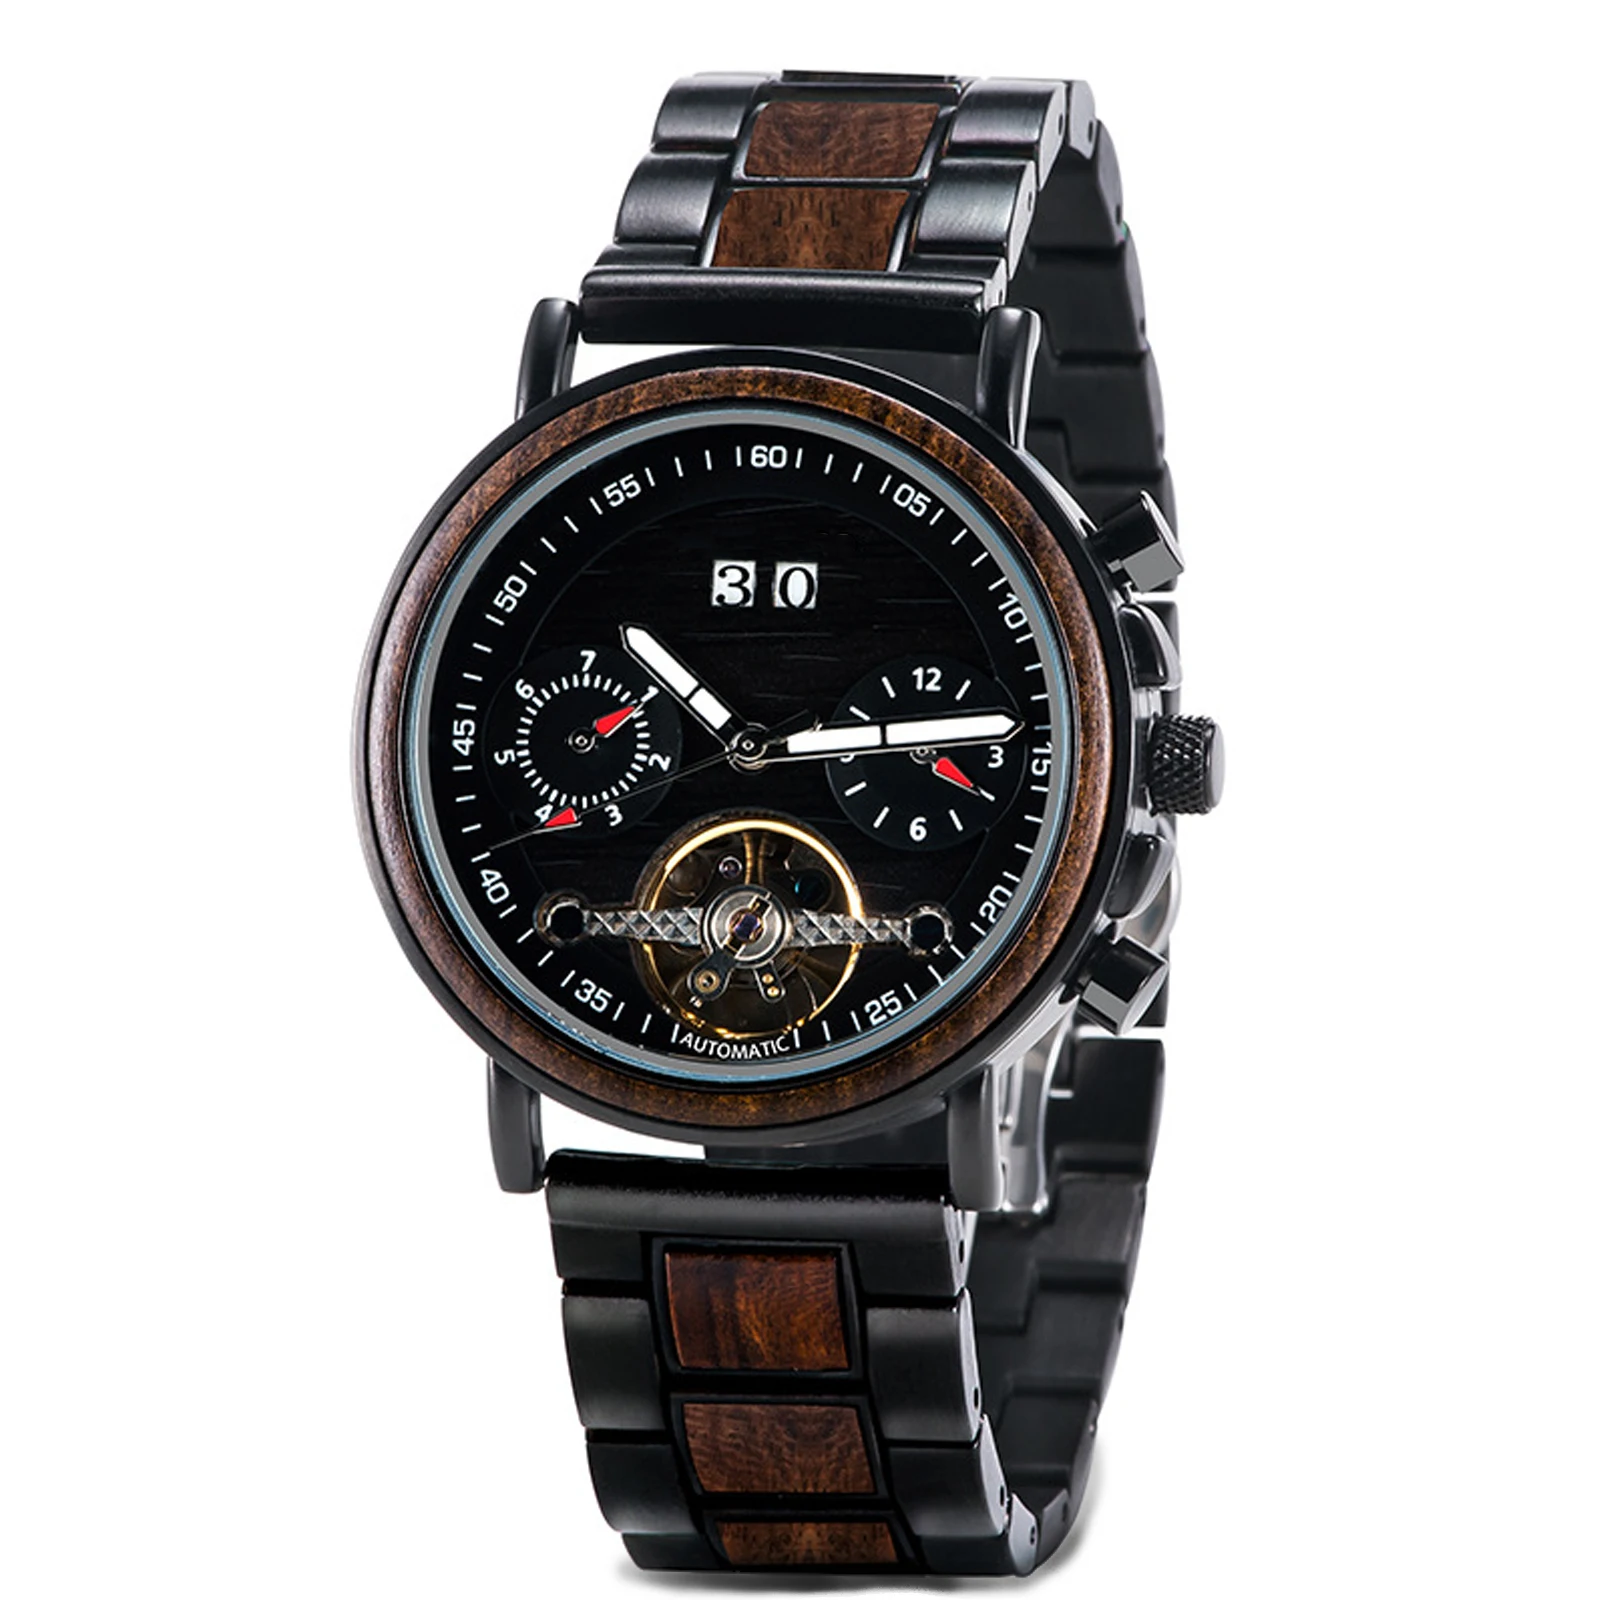 Unisex Wooden Mechanical Watch, Multi-function Display Calendar Analog Watch, Best Gift for Valentine's Day/Anniversary